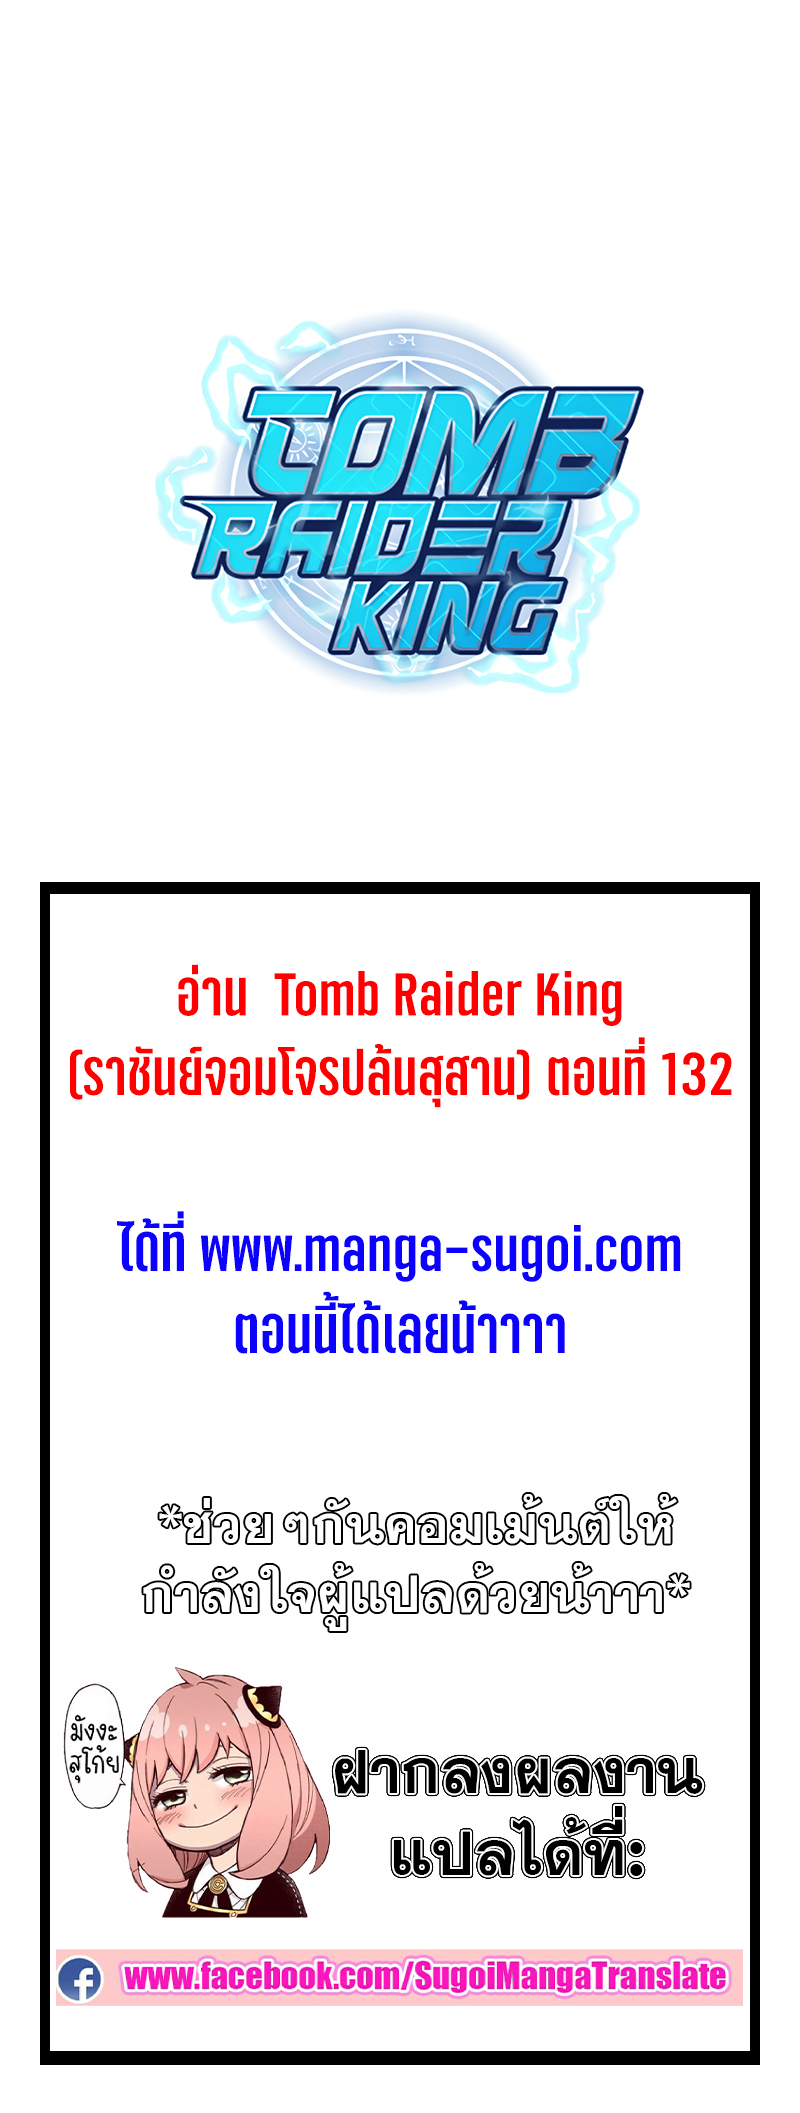 Tomb Raider King 17